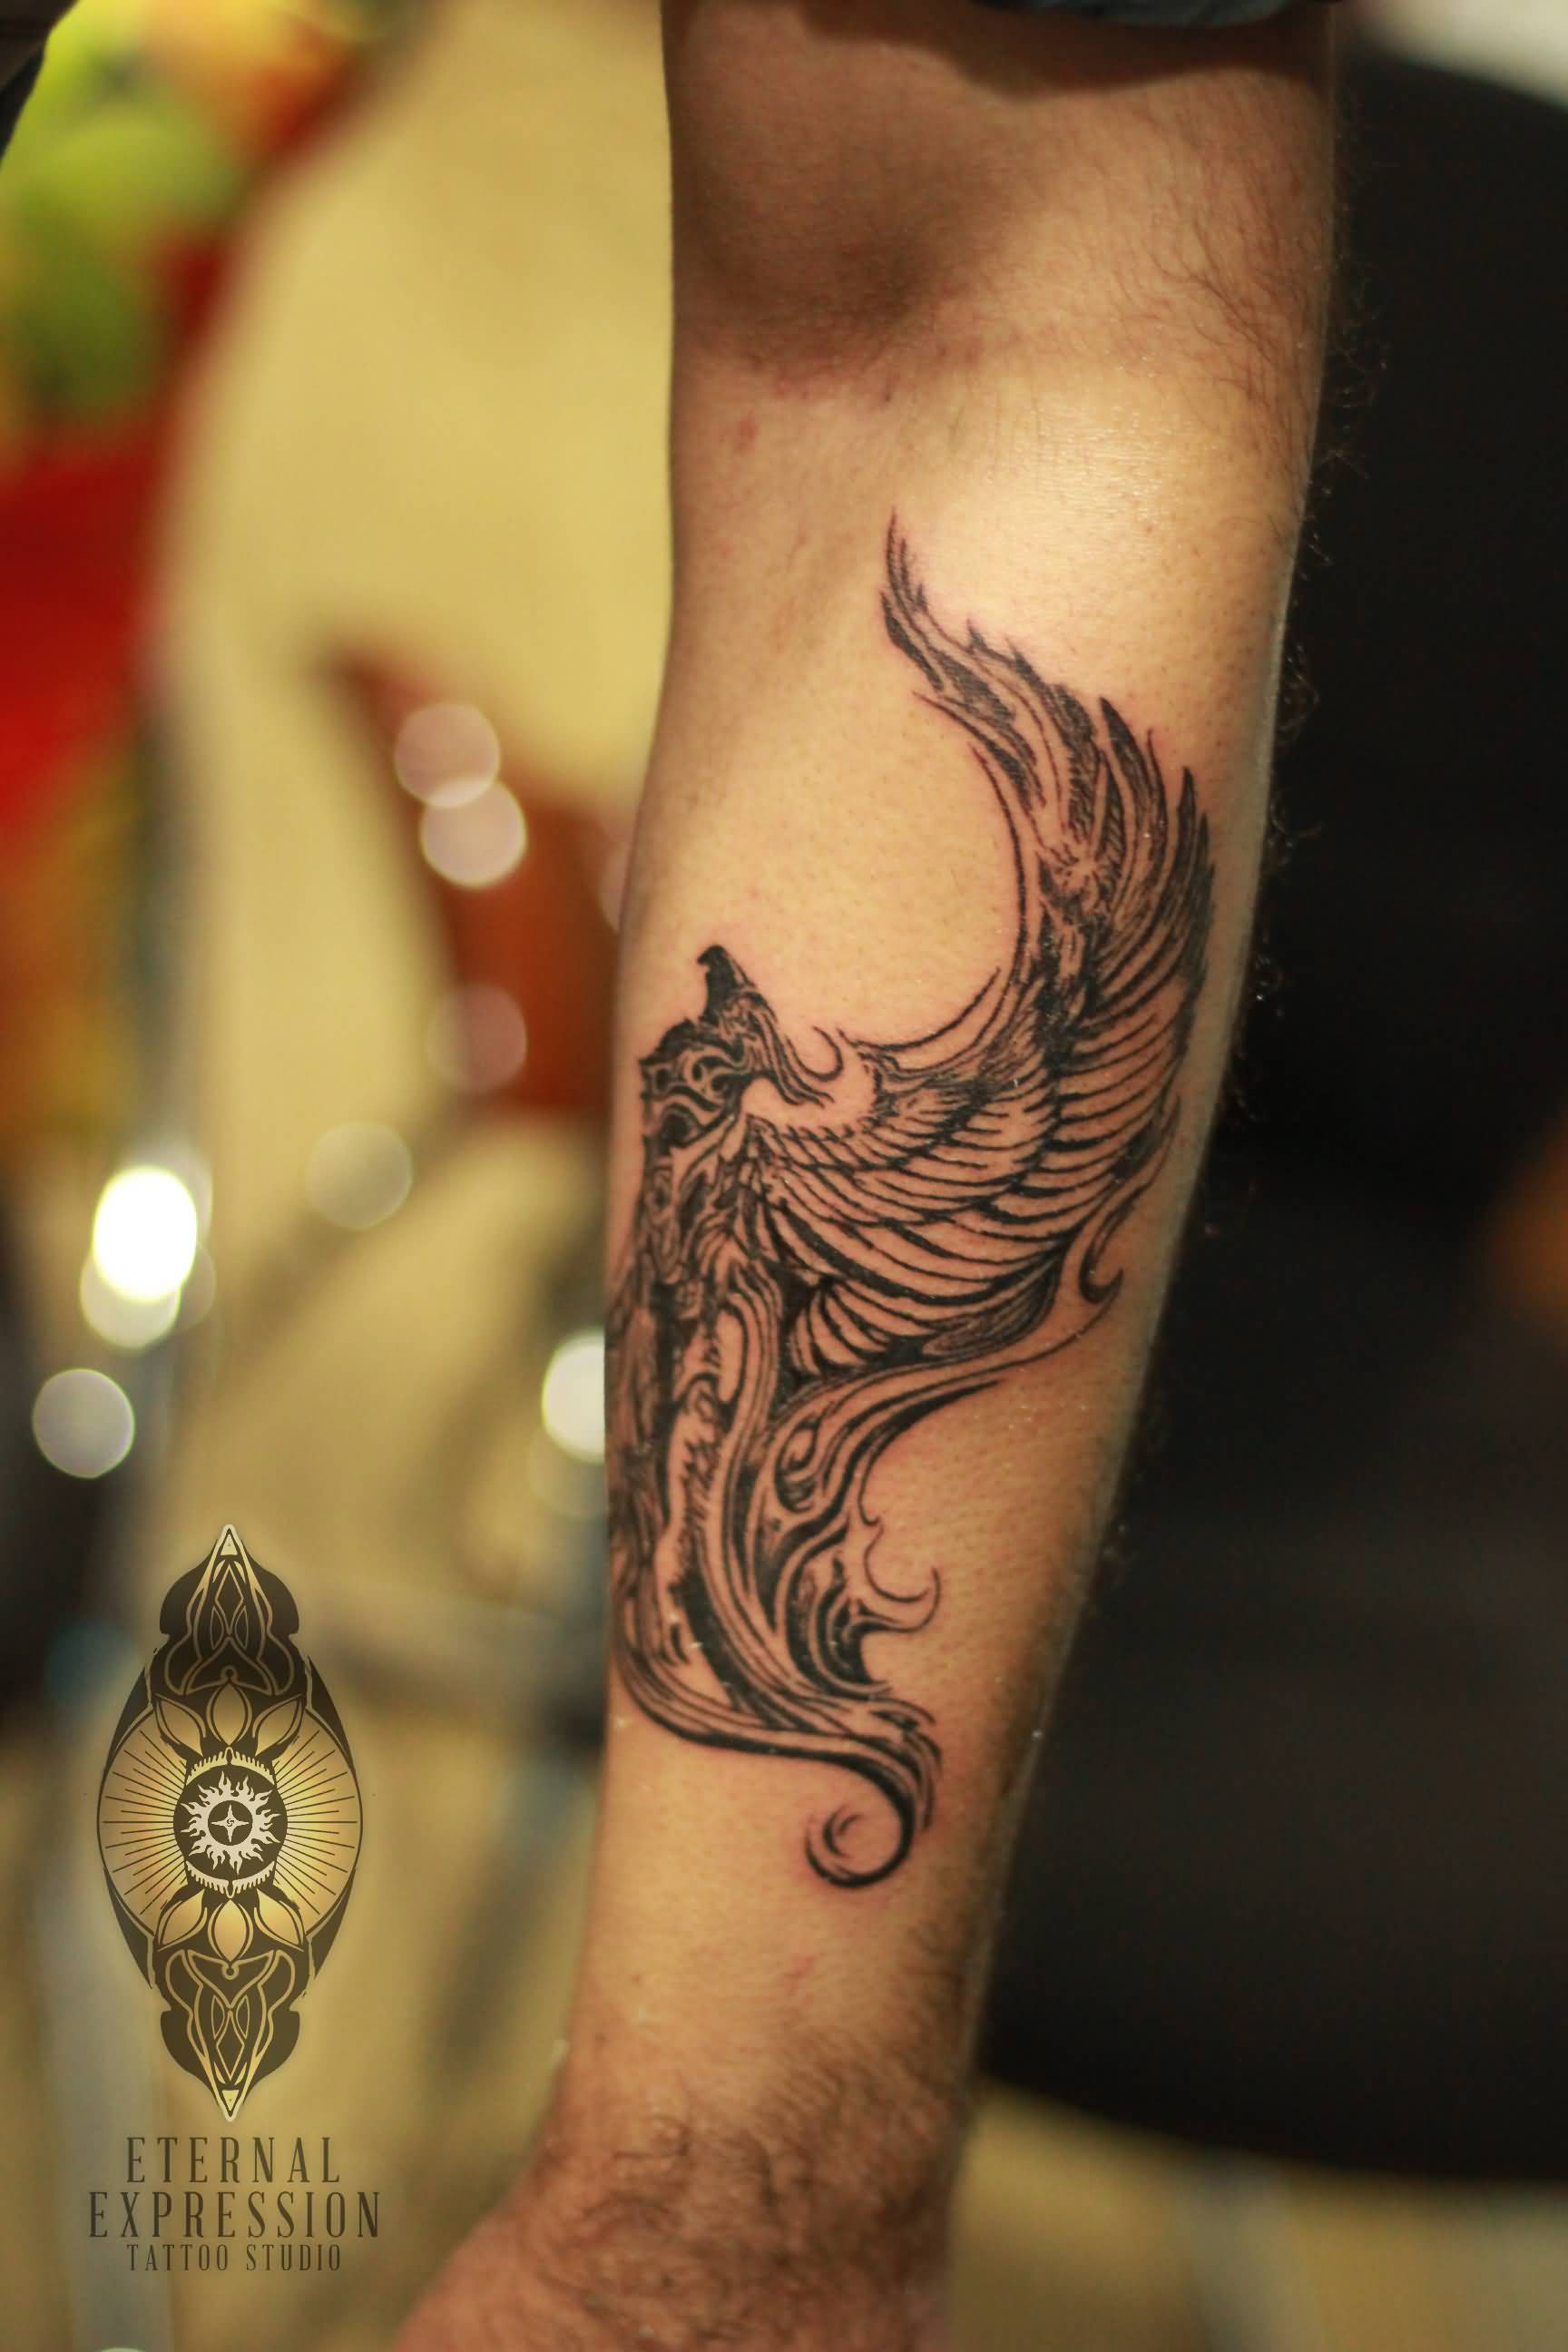 Black Ink Flying Phoenix Tattoo Design For Forearm